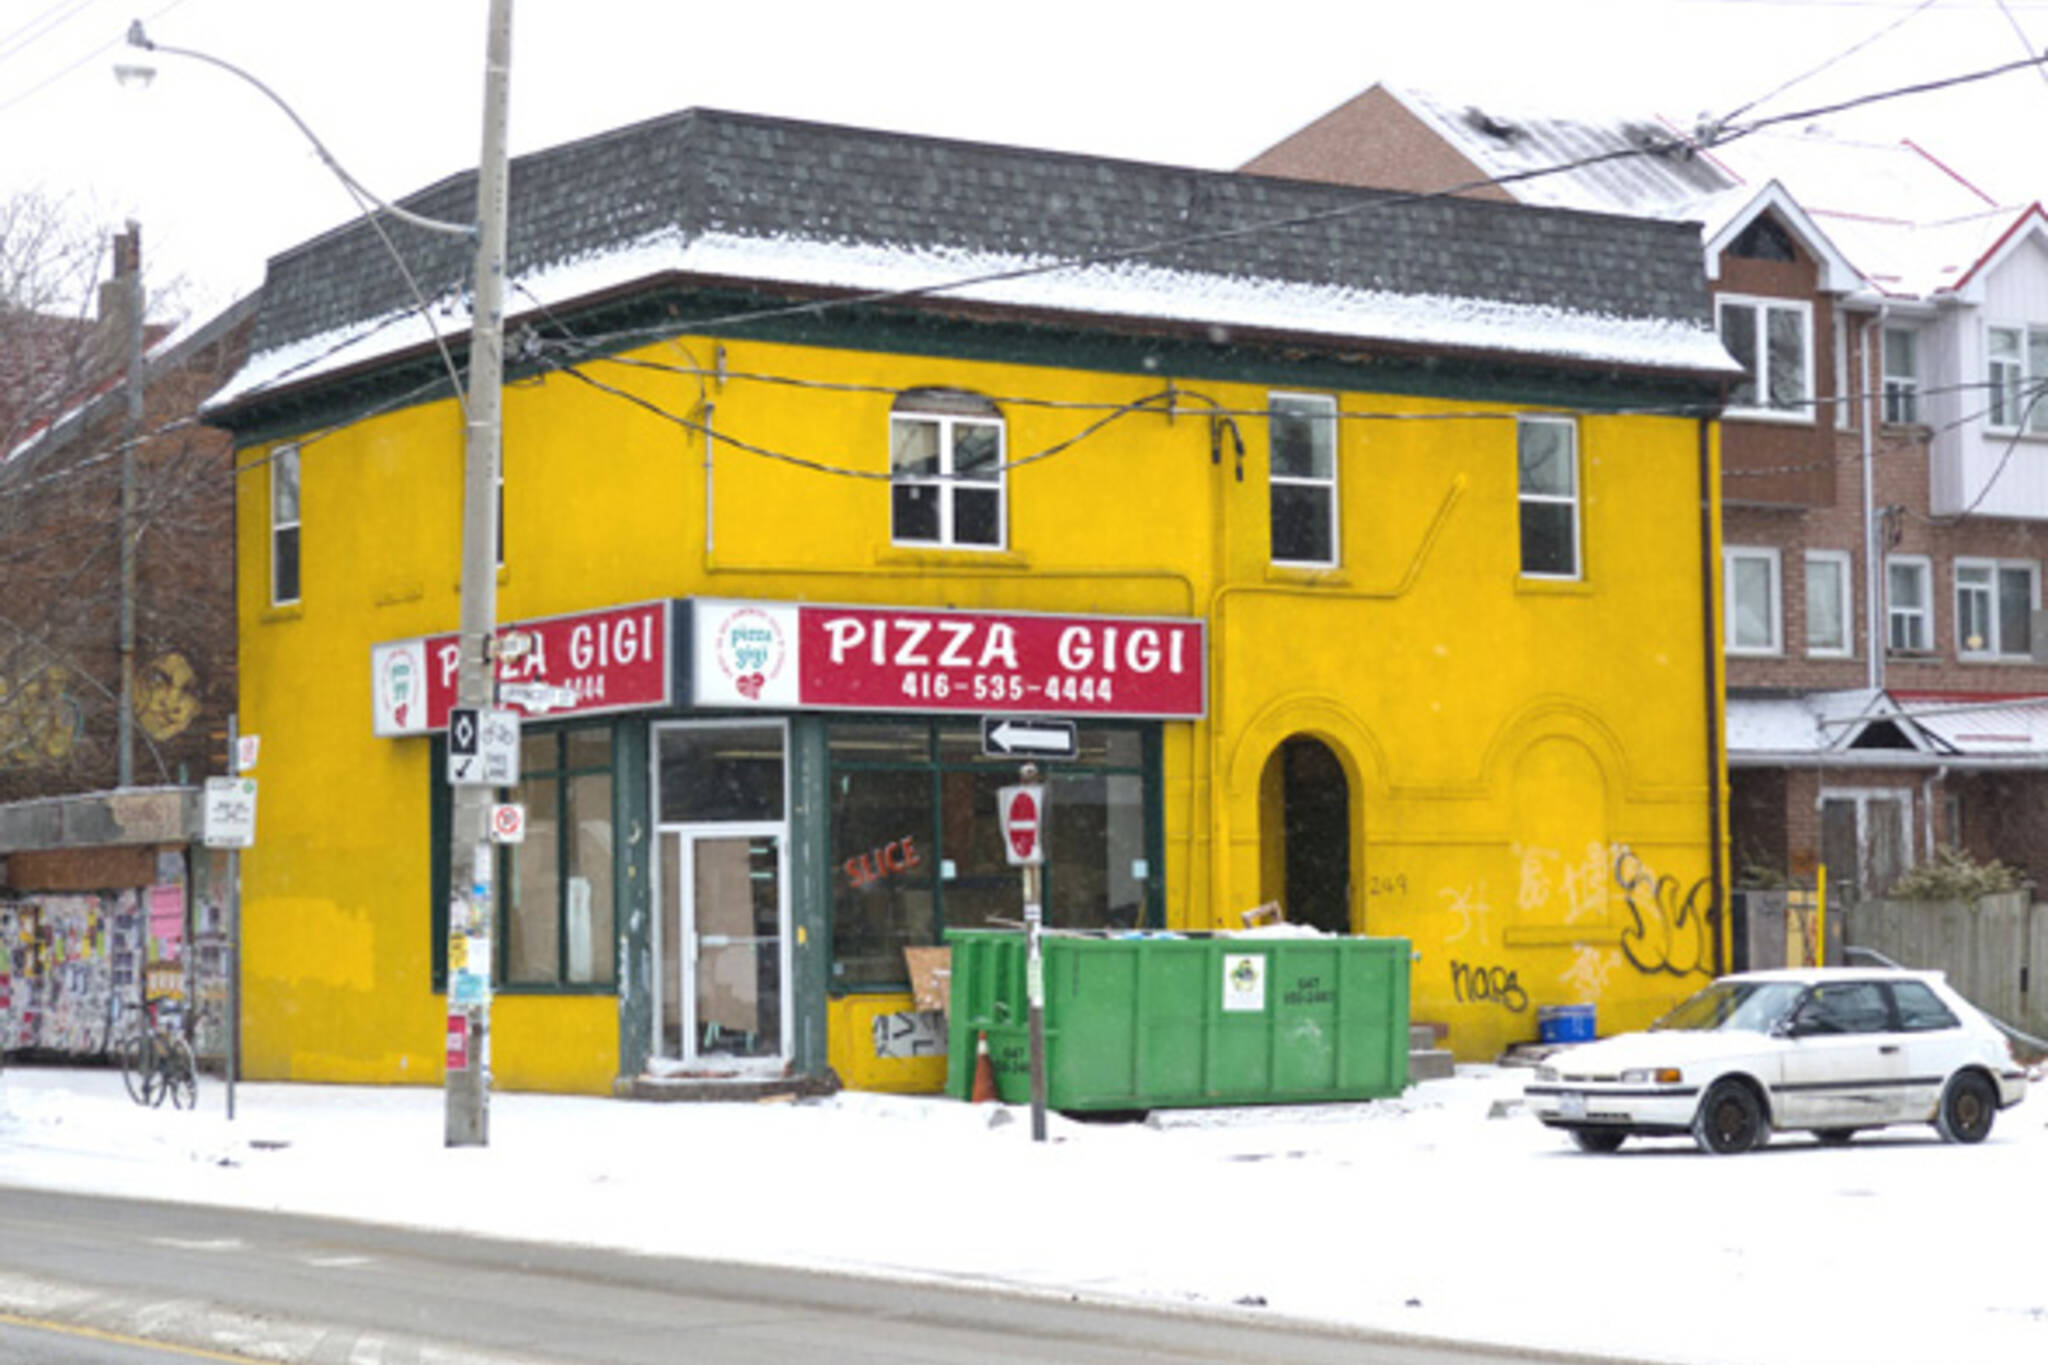 Pizza Gigi reopens